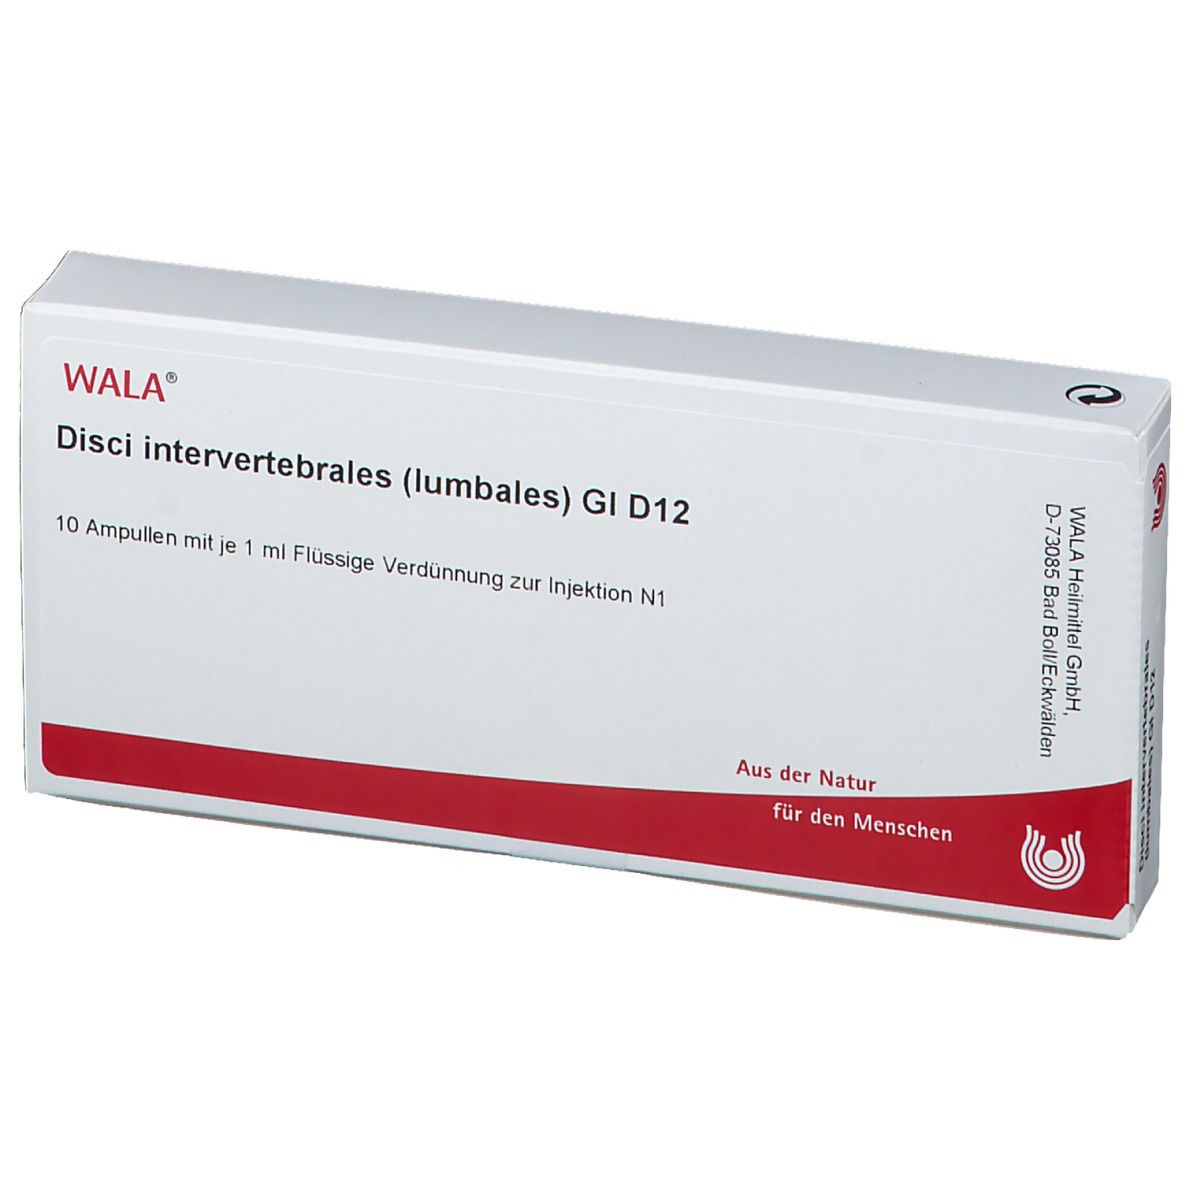 WALA® Disci Intervertebrales lumbales Gl D 12